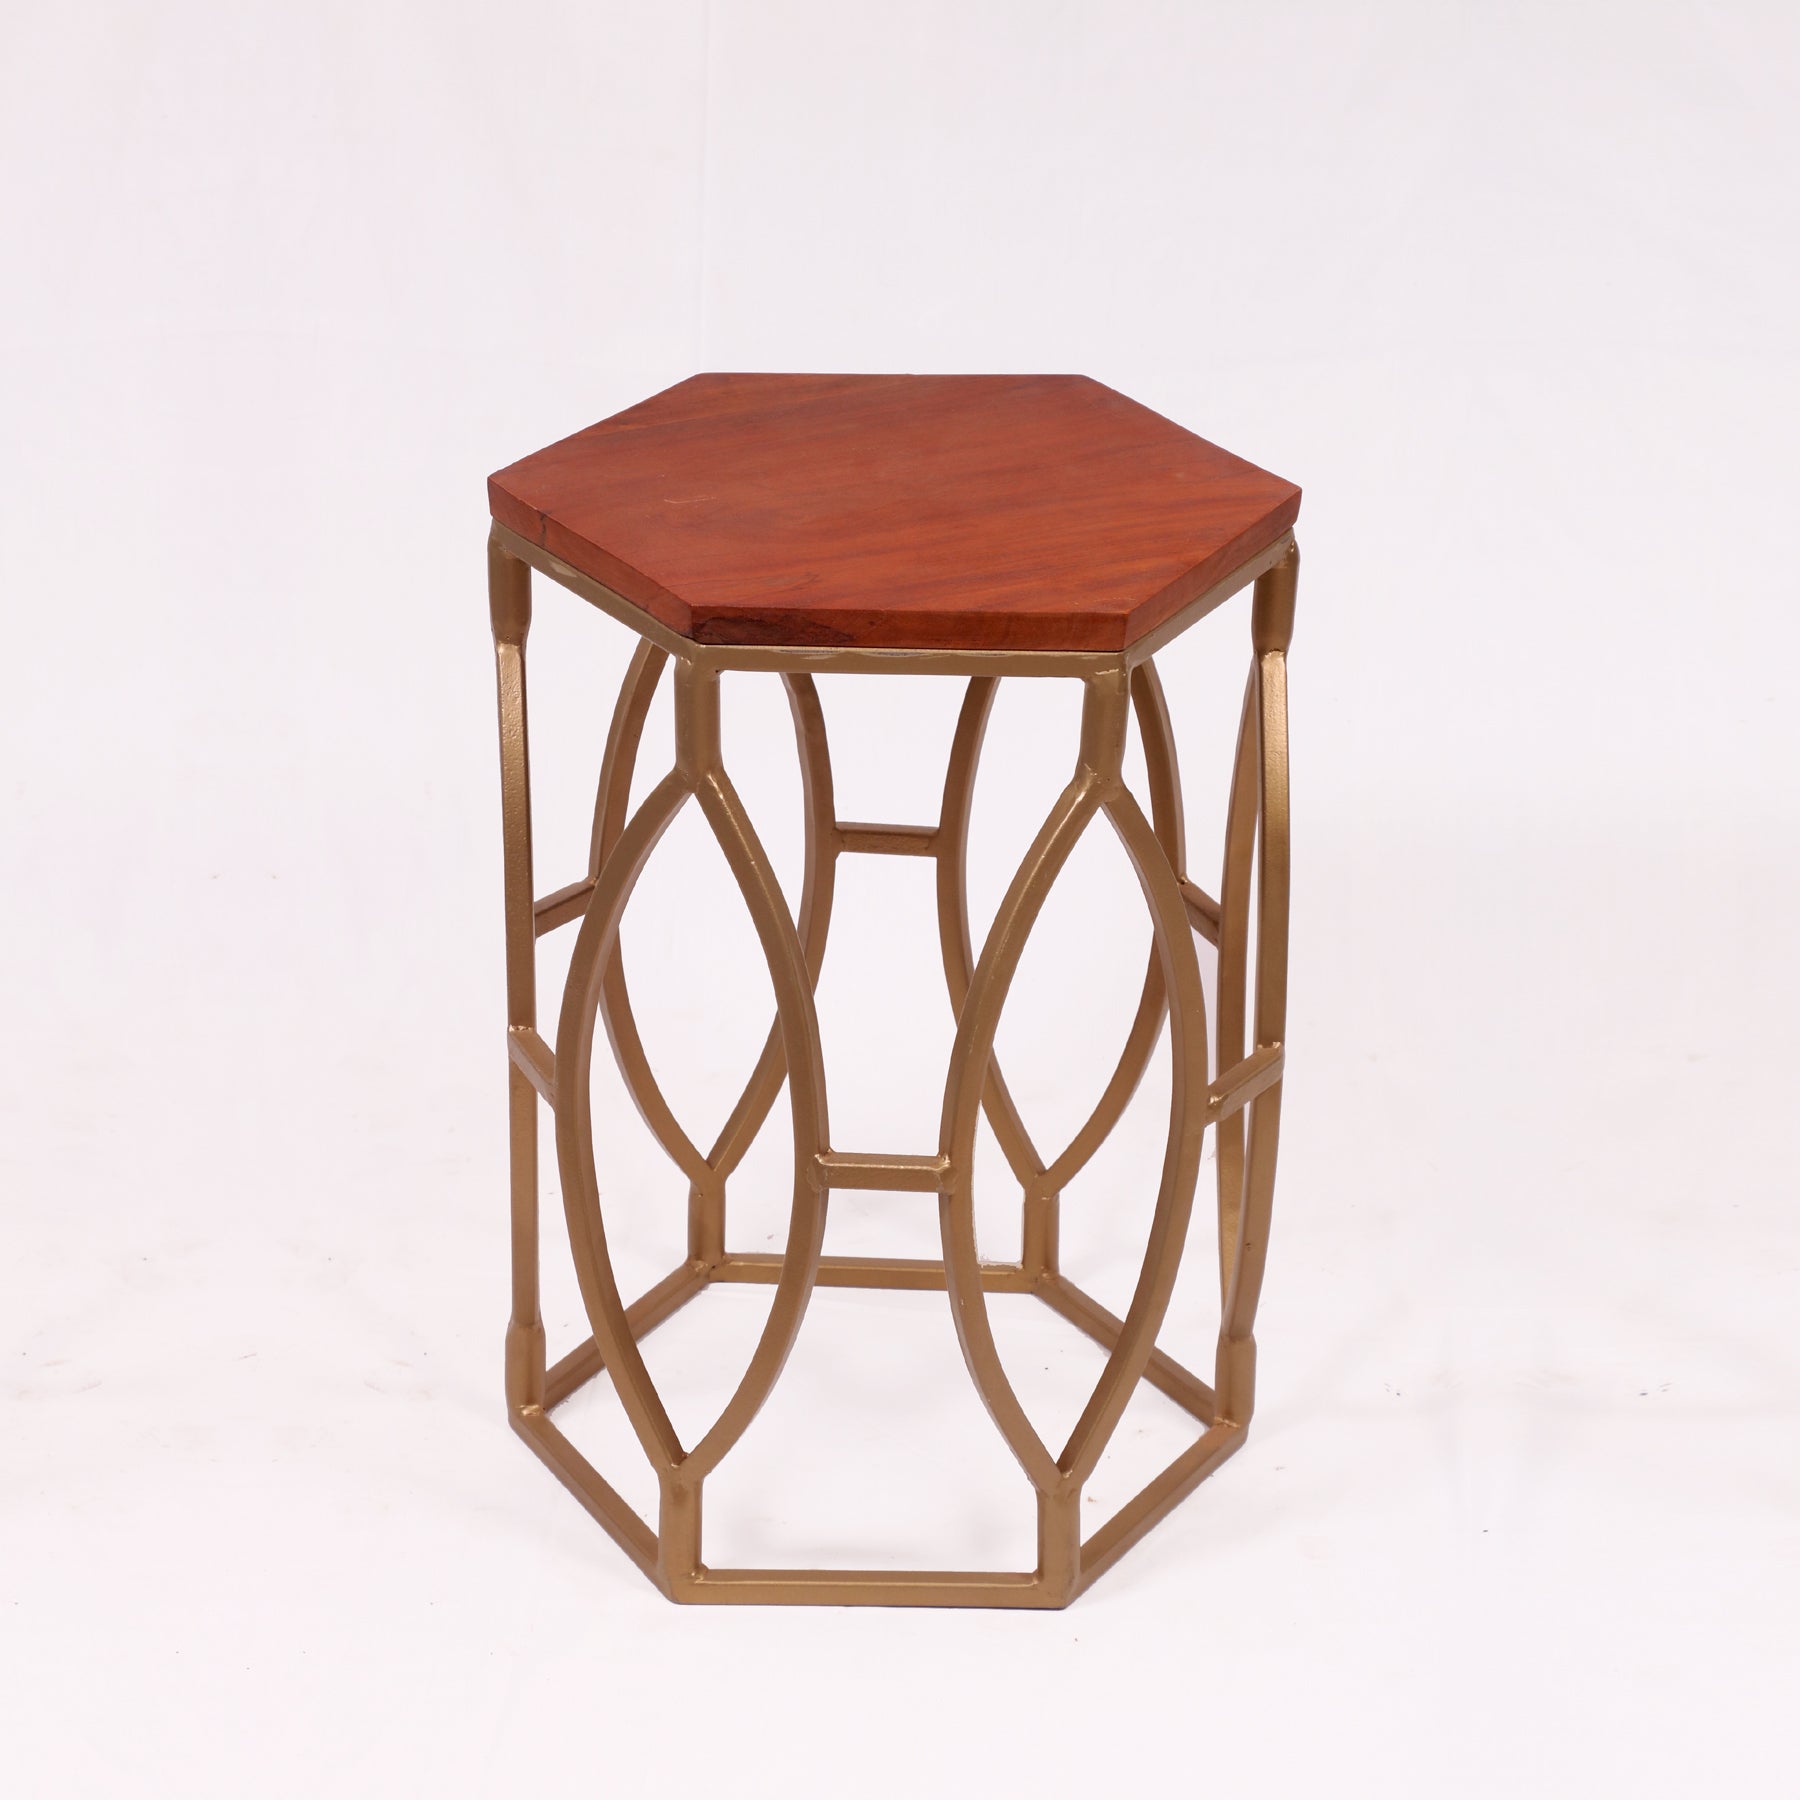 Hexagonal Metallic Coffee Table (Golden) End Table